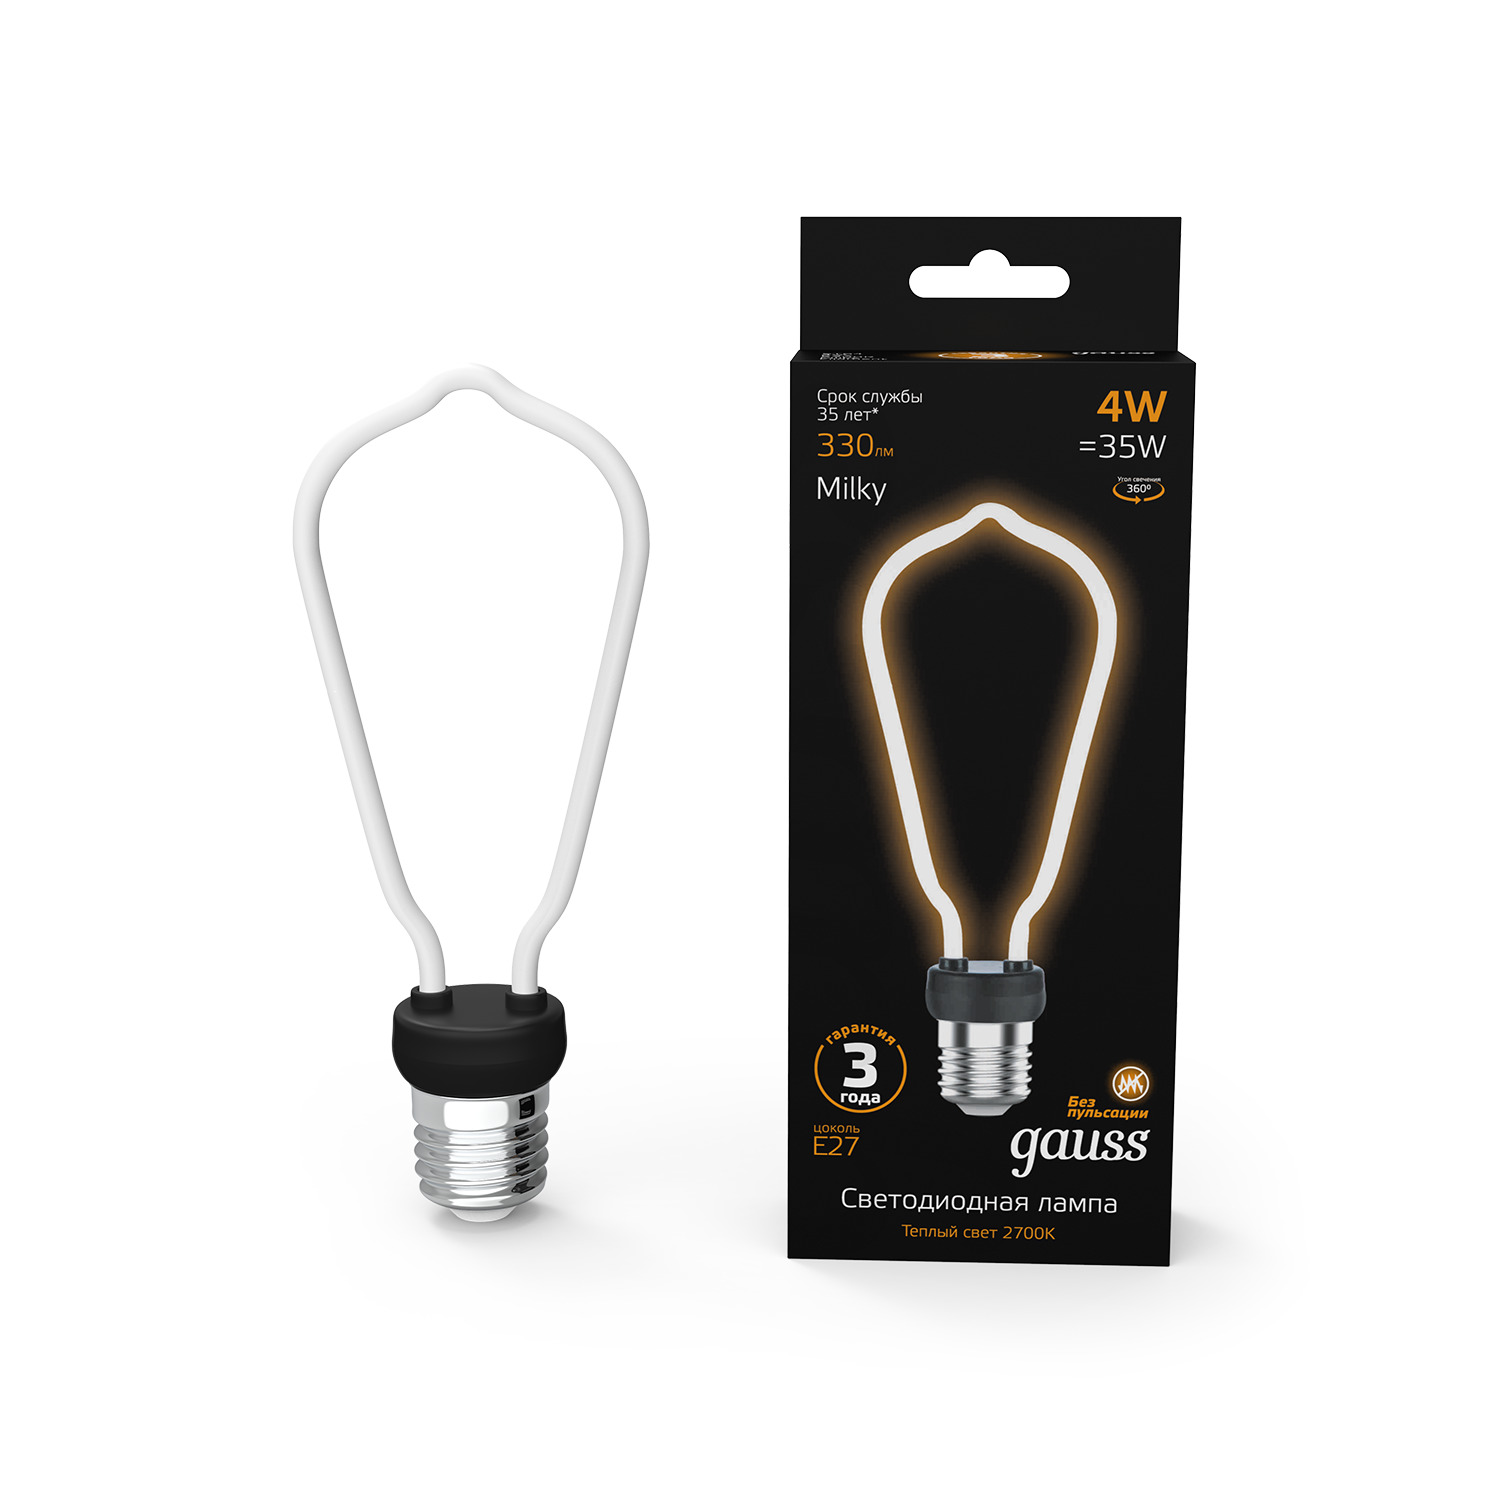 цена Лампа Gauss LED Filament Bulbless ST64 Milky E27 4W 330 Лм 2700K 64x165мм